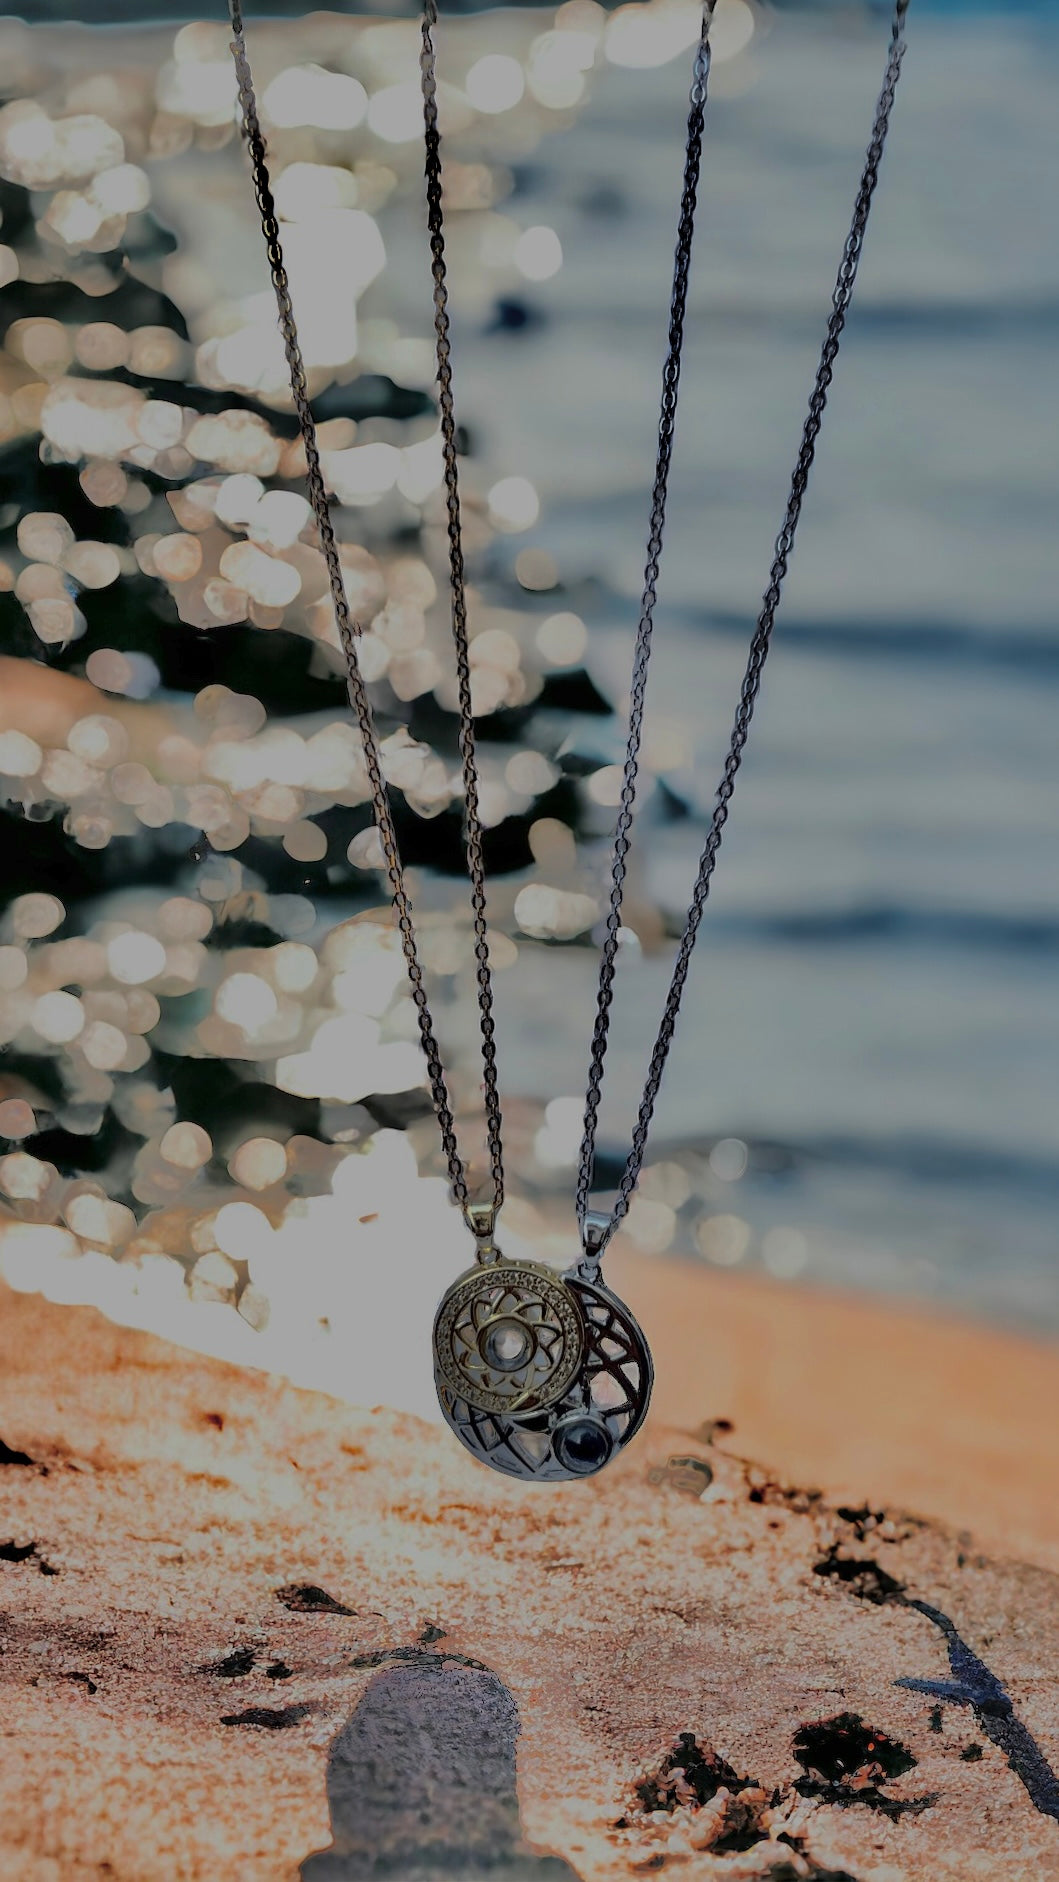 Sun Moon necklace set